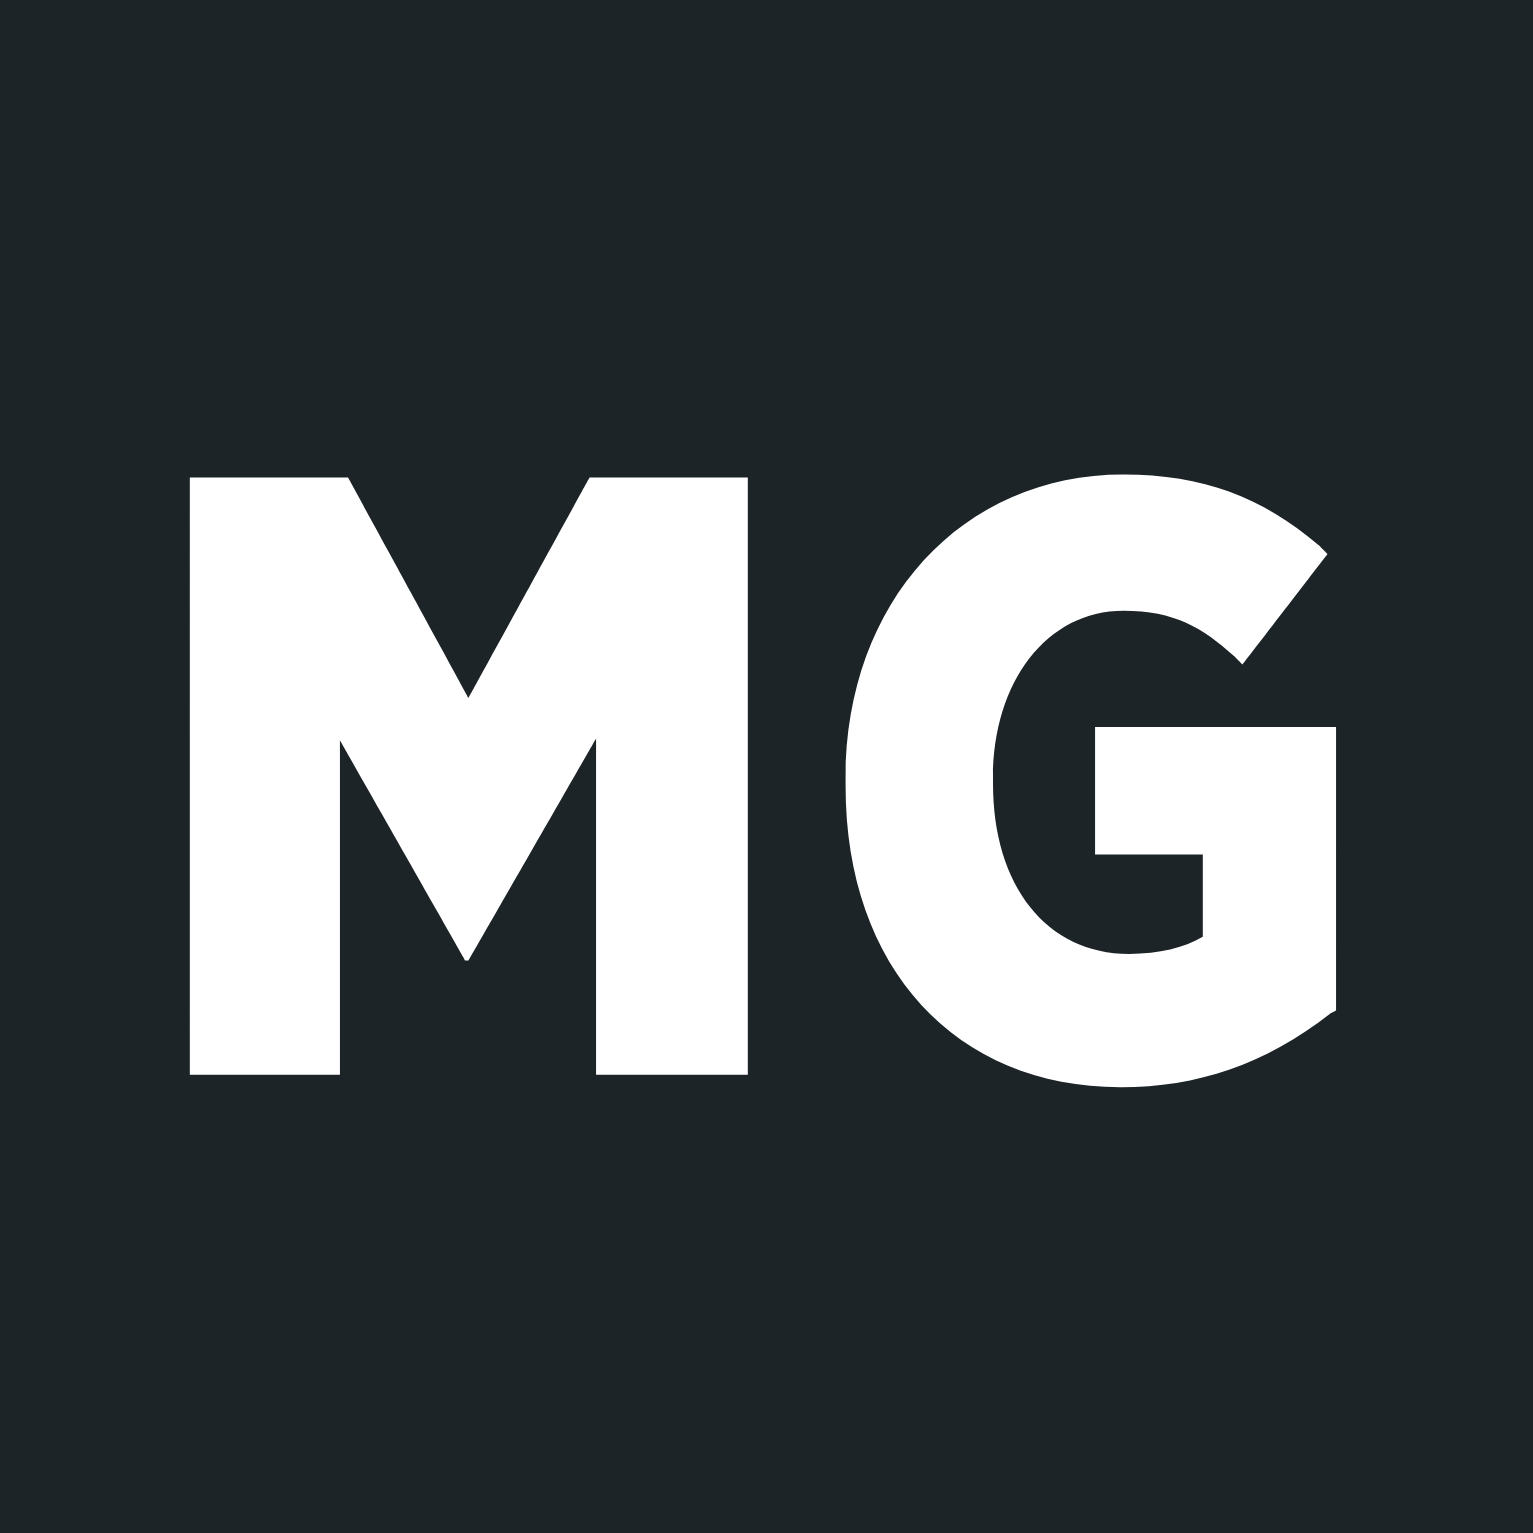 Multiply Group logo (PNG transparent)